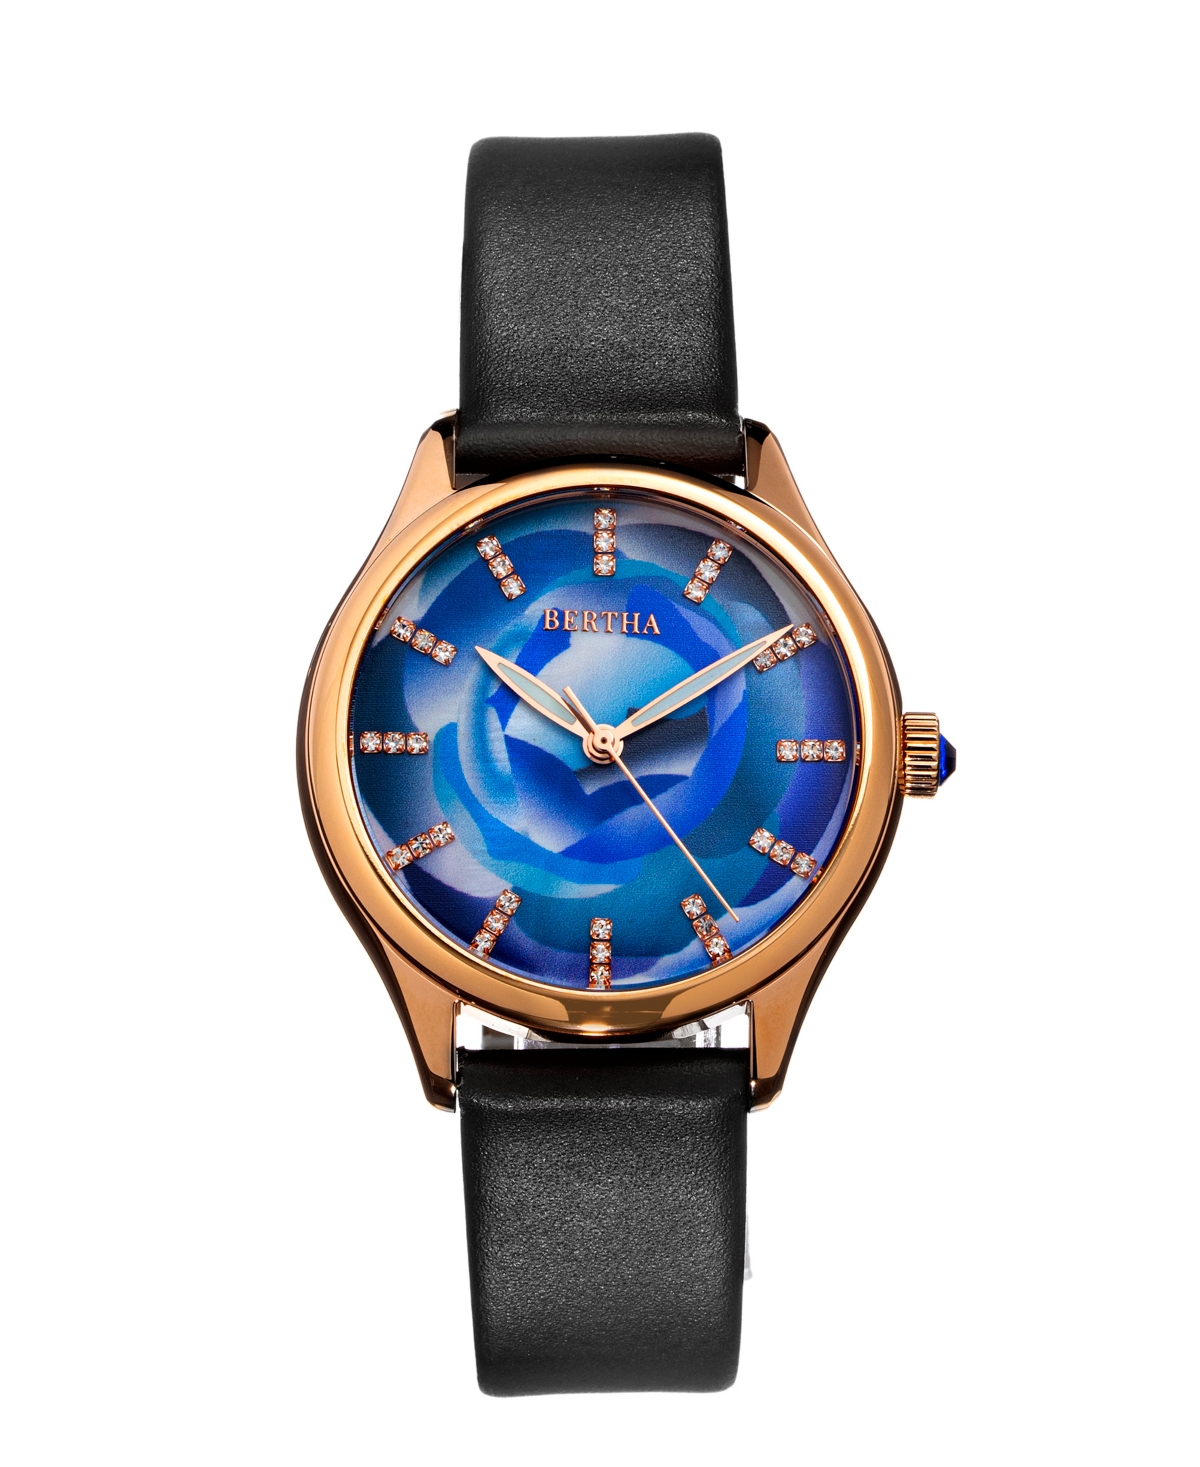 Bertha Georgiana Black or Blue or Magenta or Pink or Black or Beige Genuine Leather Band Watch, 38mm